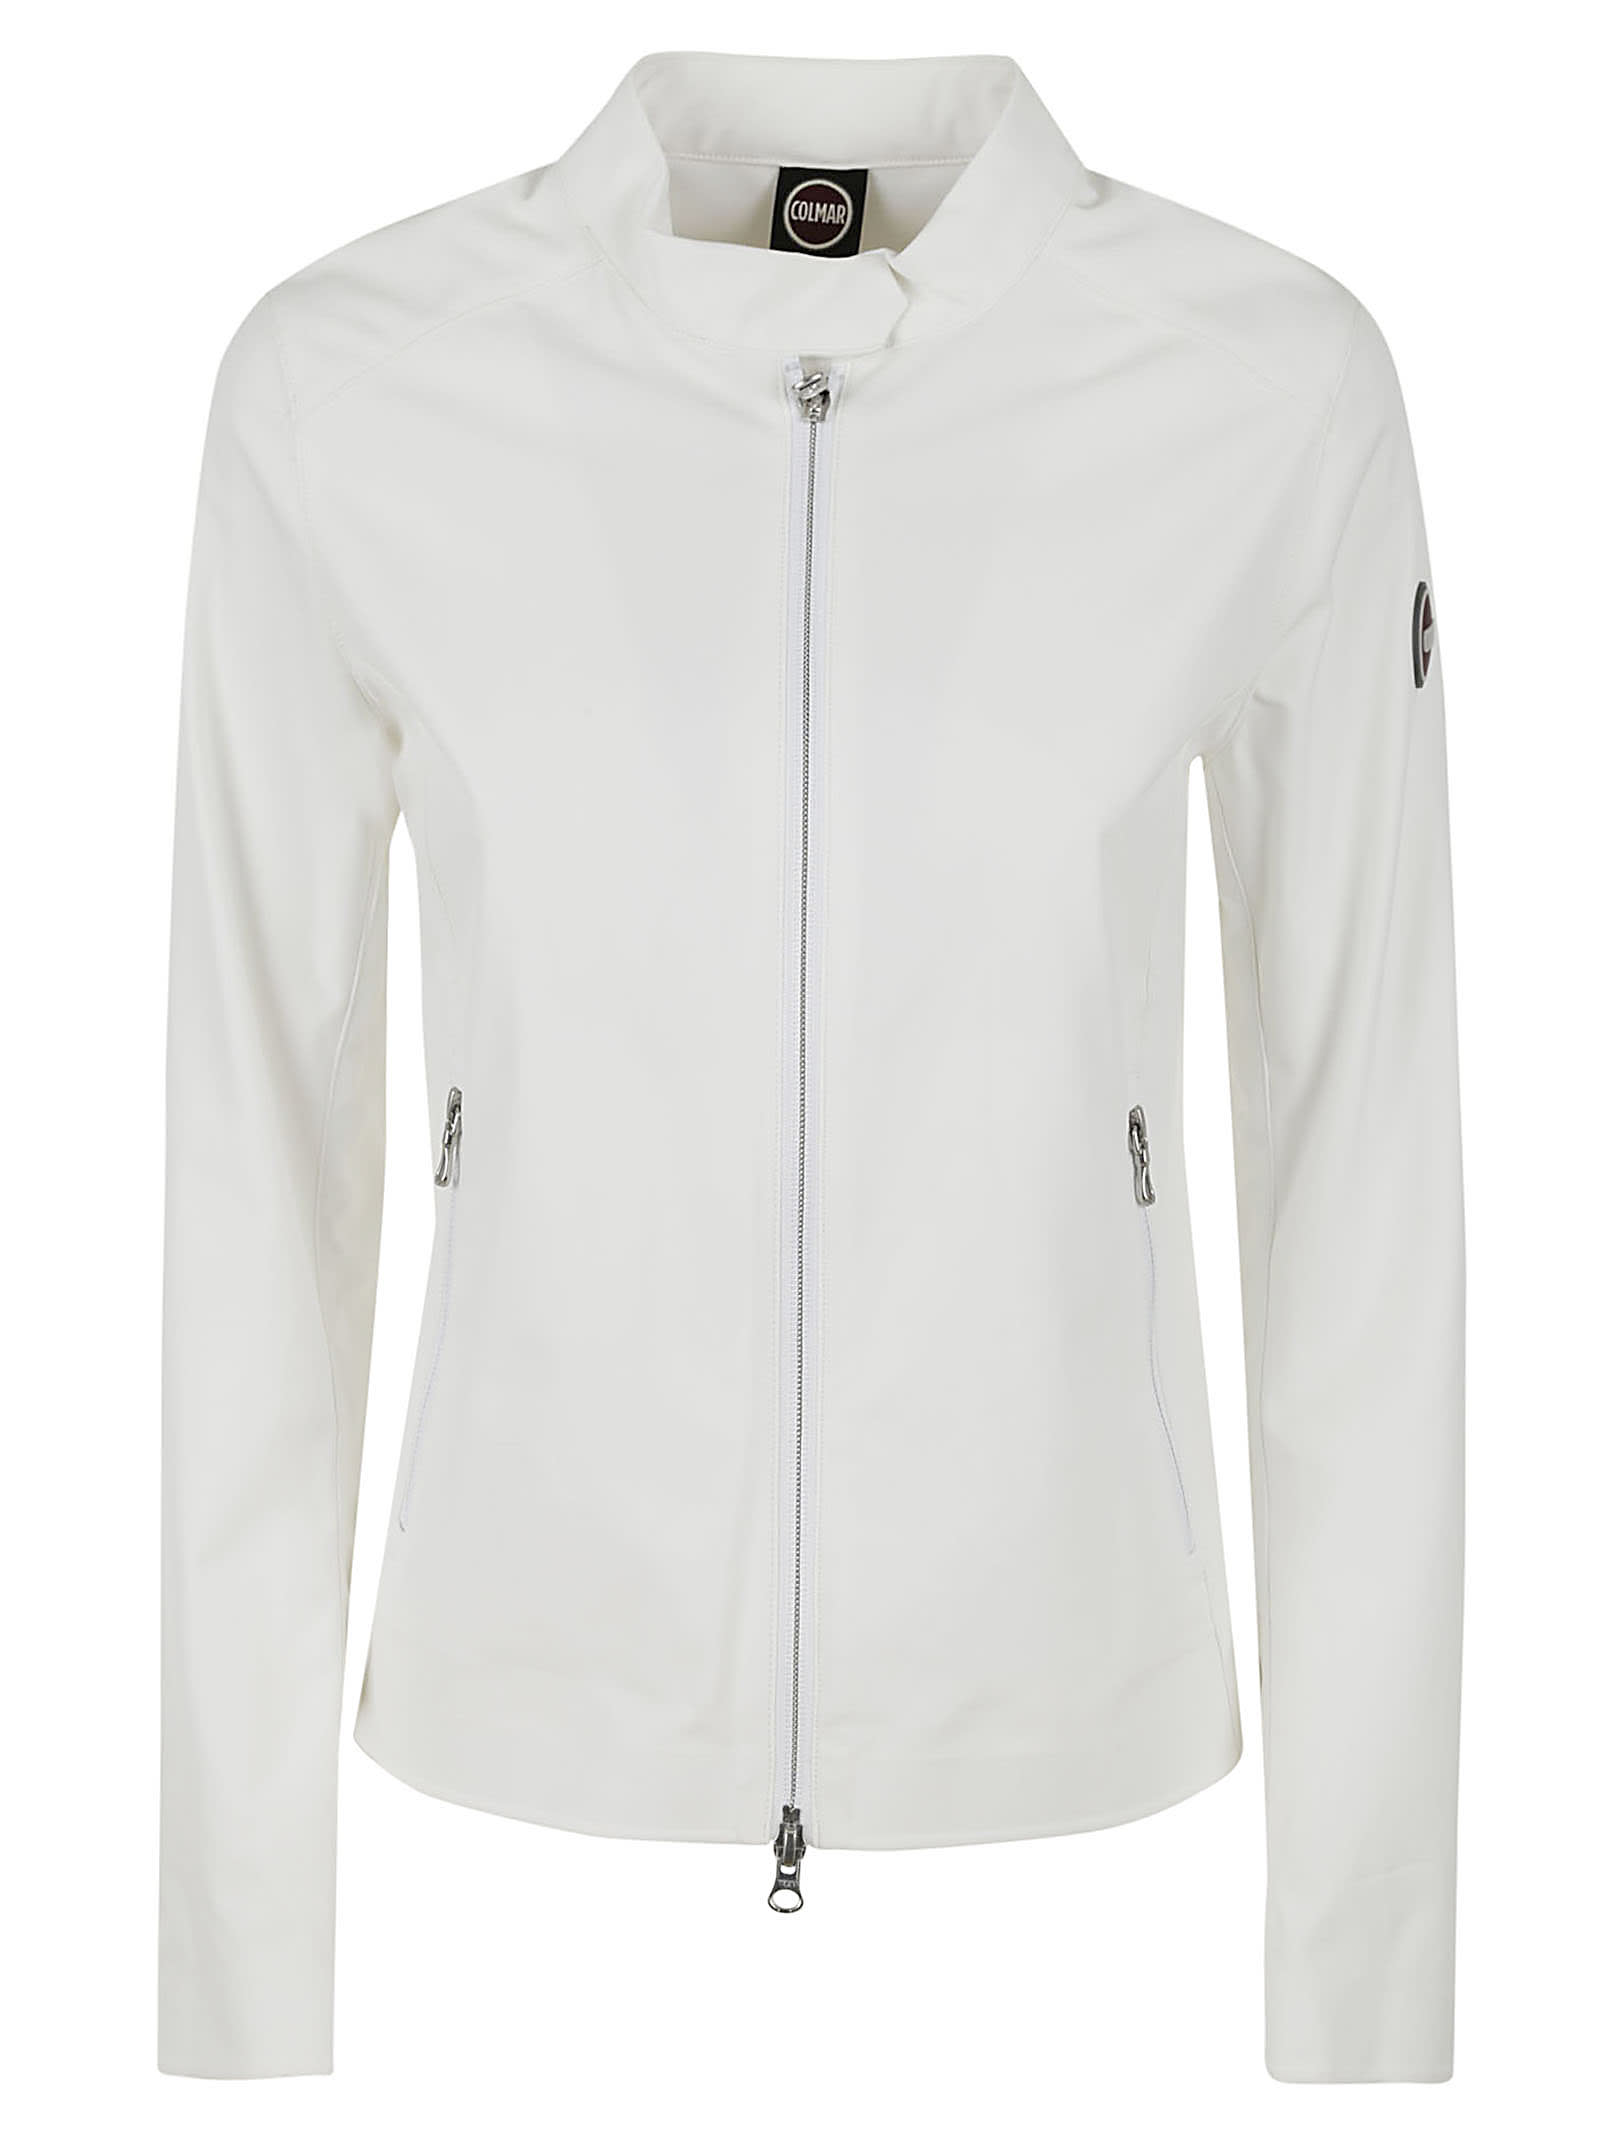 Colmar New Futurity Jacket In White